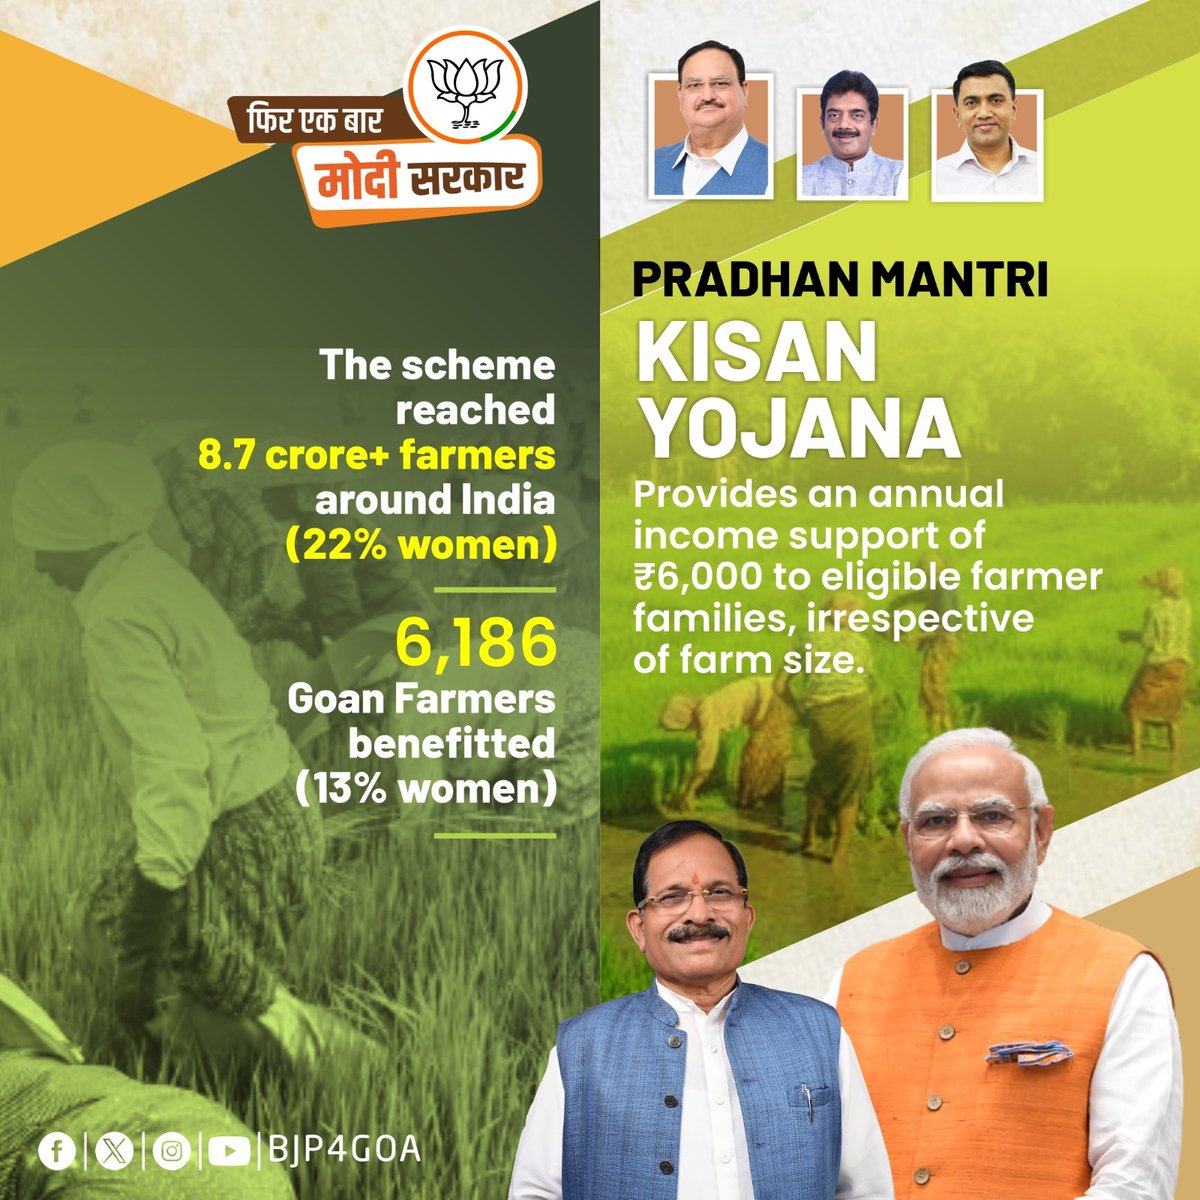 PM Kisan Yojana provides an aid of ₹6,000 annually to farmers,helping millions of farmers reduce income uncertainties #ModiKiGuarantee